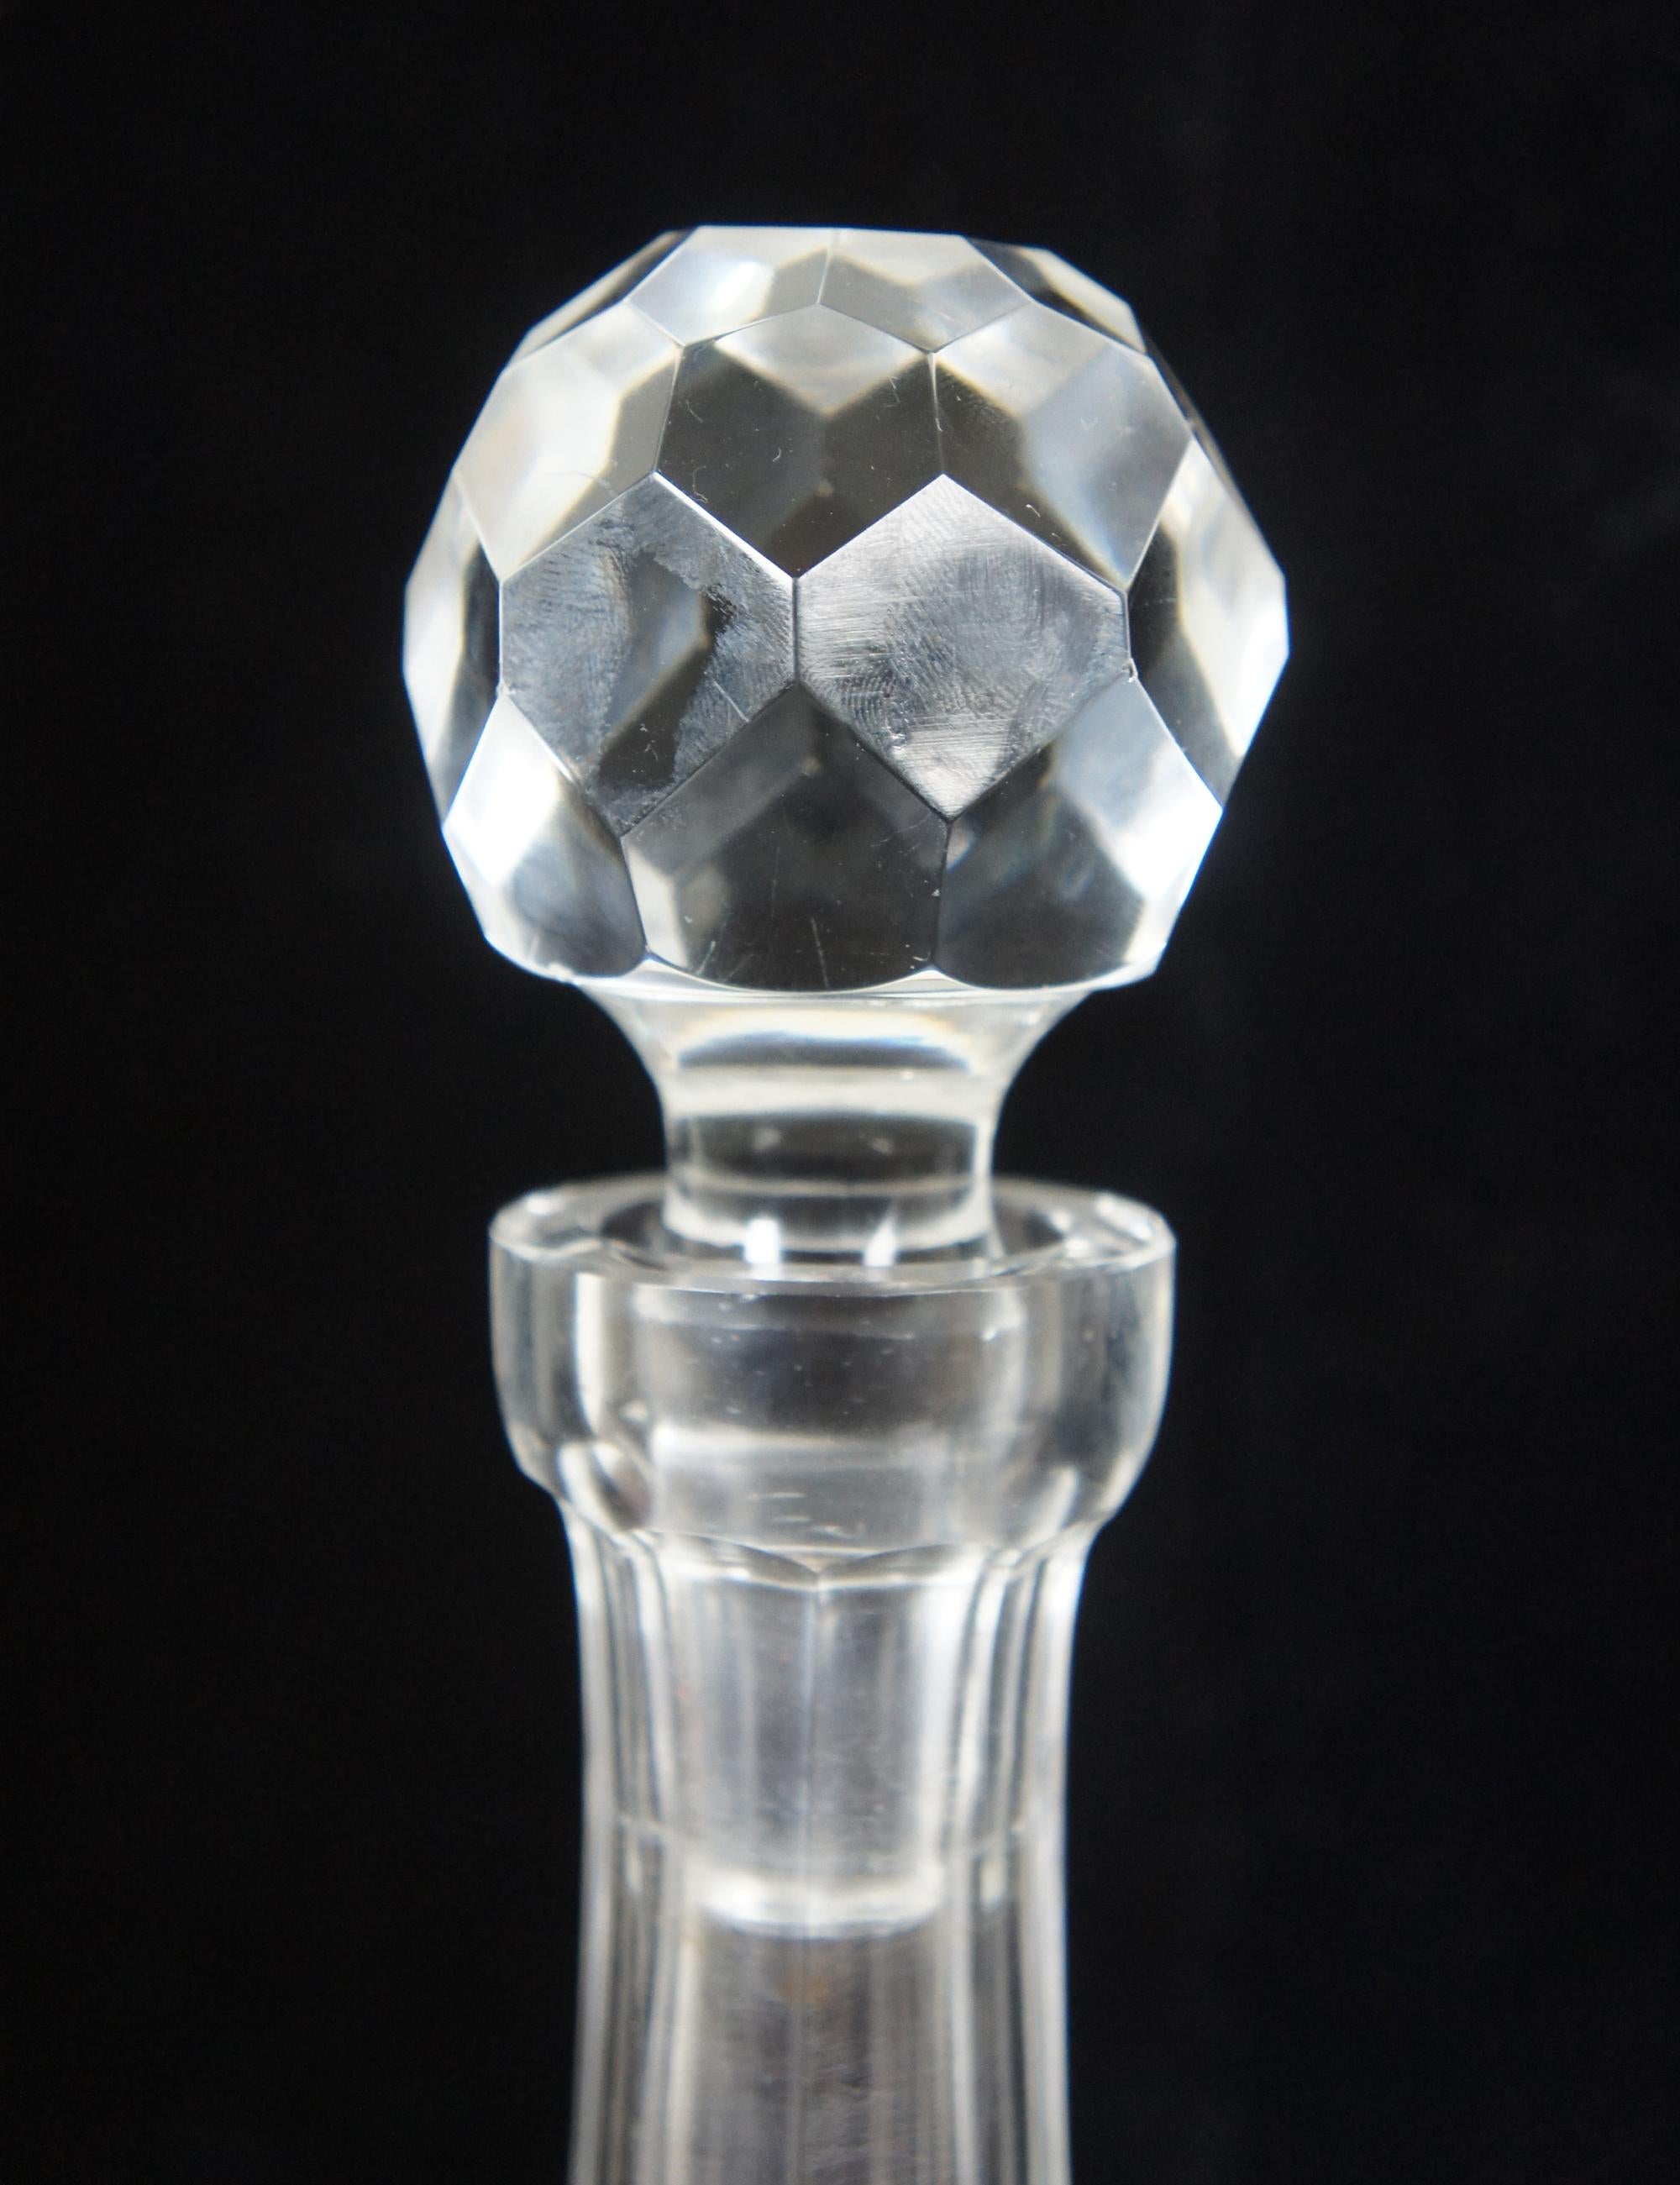 Northern Irish Waterford Lismore Irish Cut Crystal Ships Decanter Bottle Barware Liquor Spirits